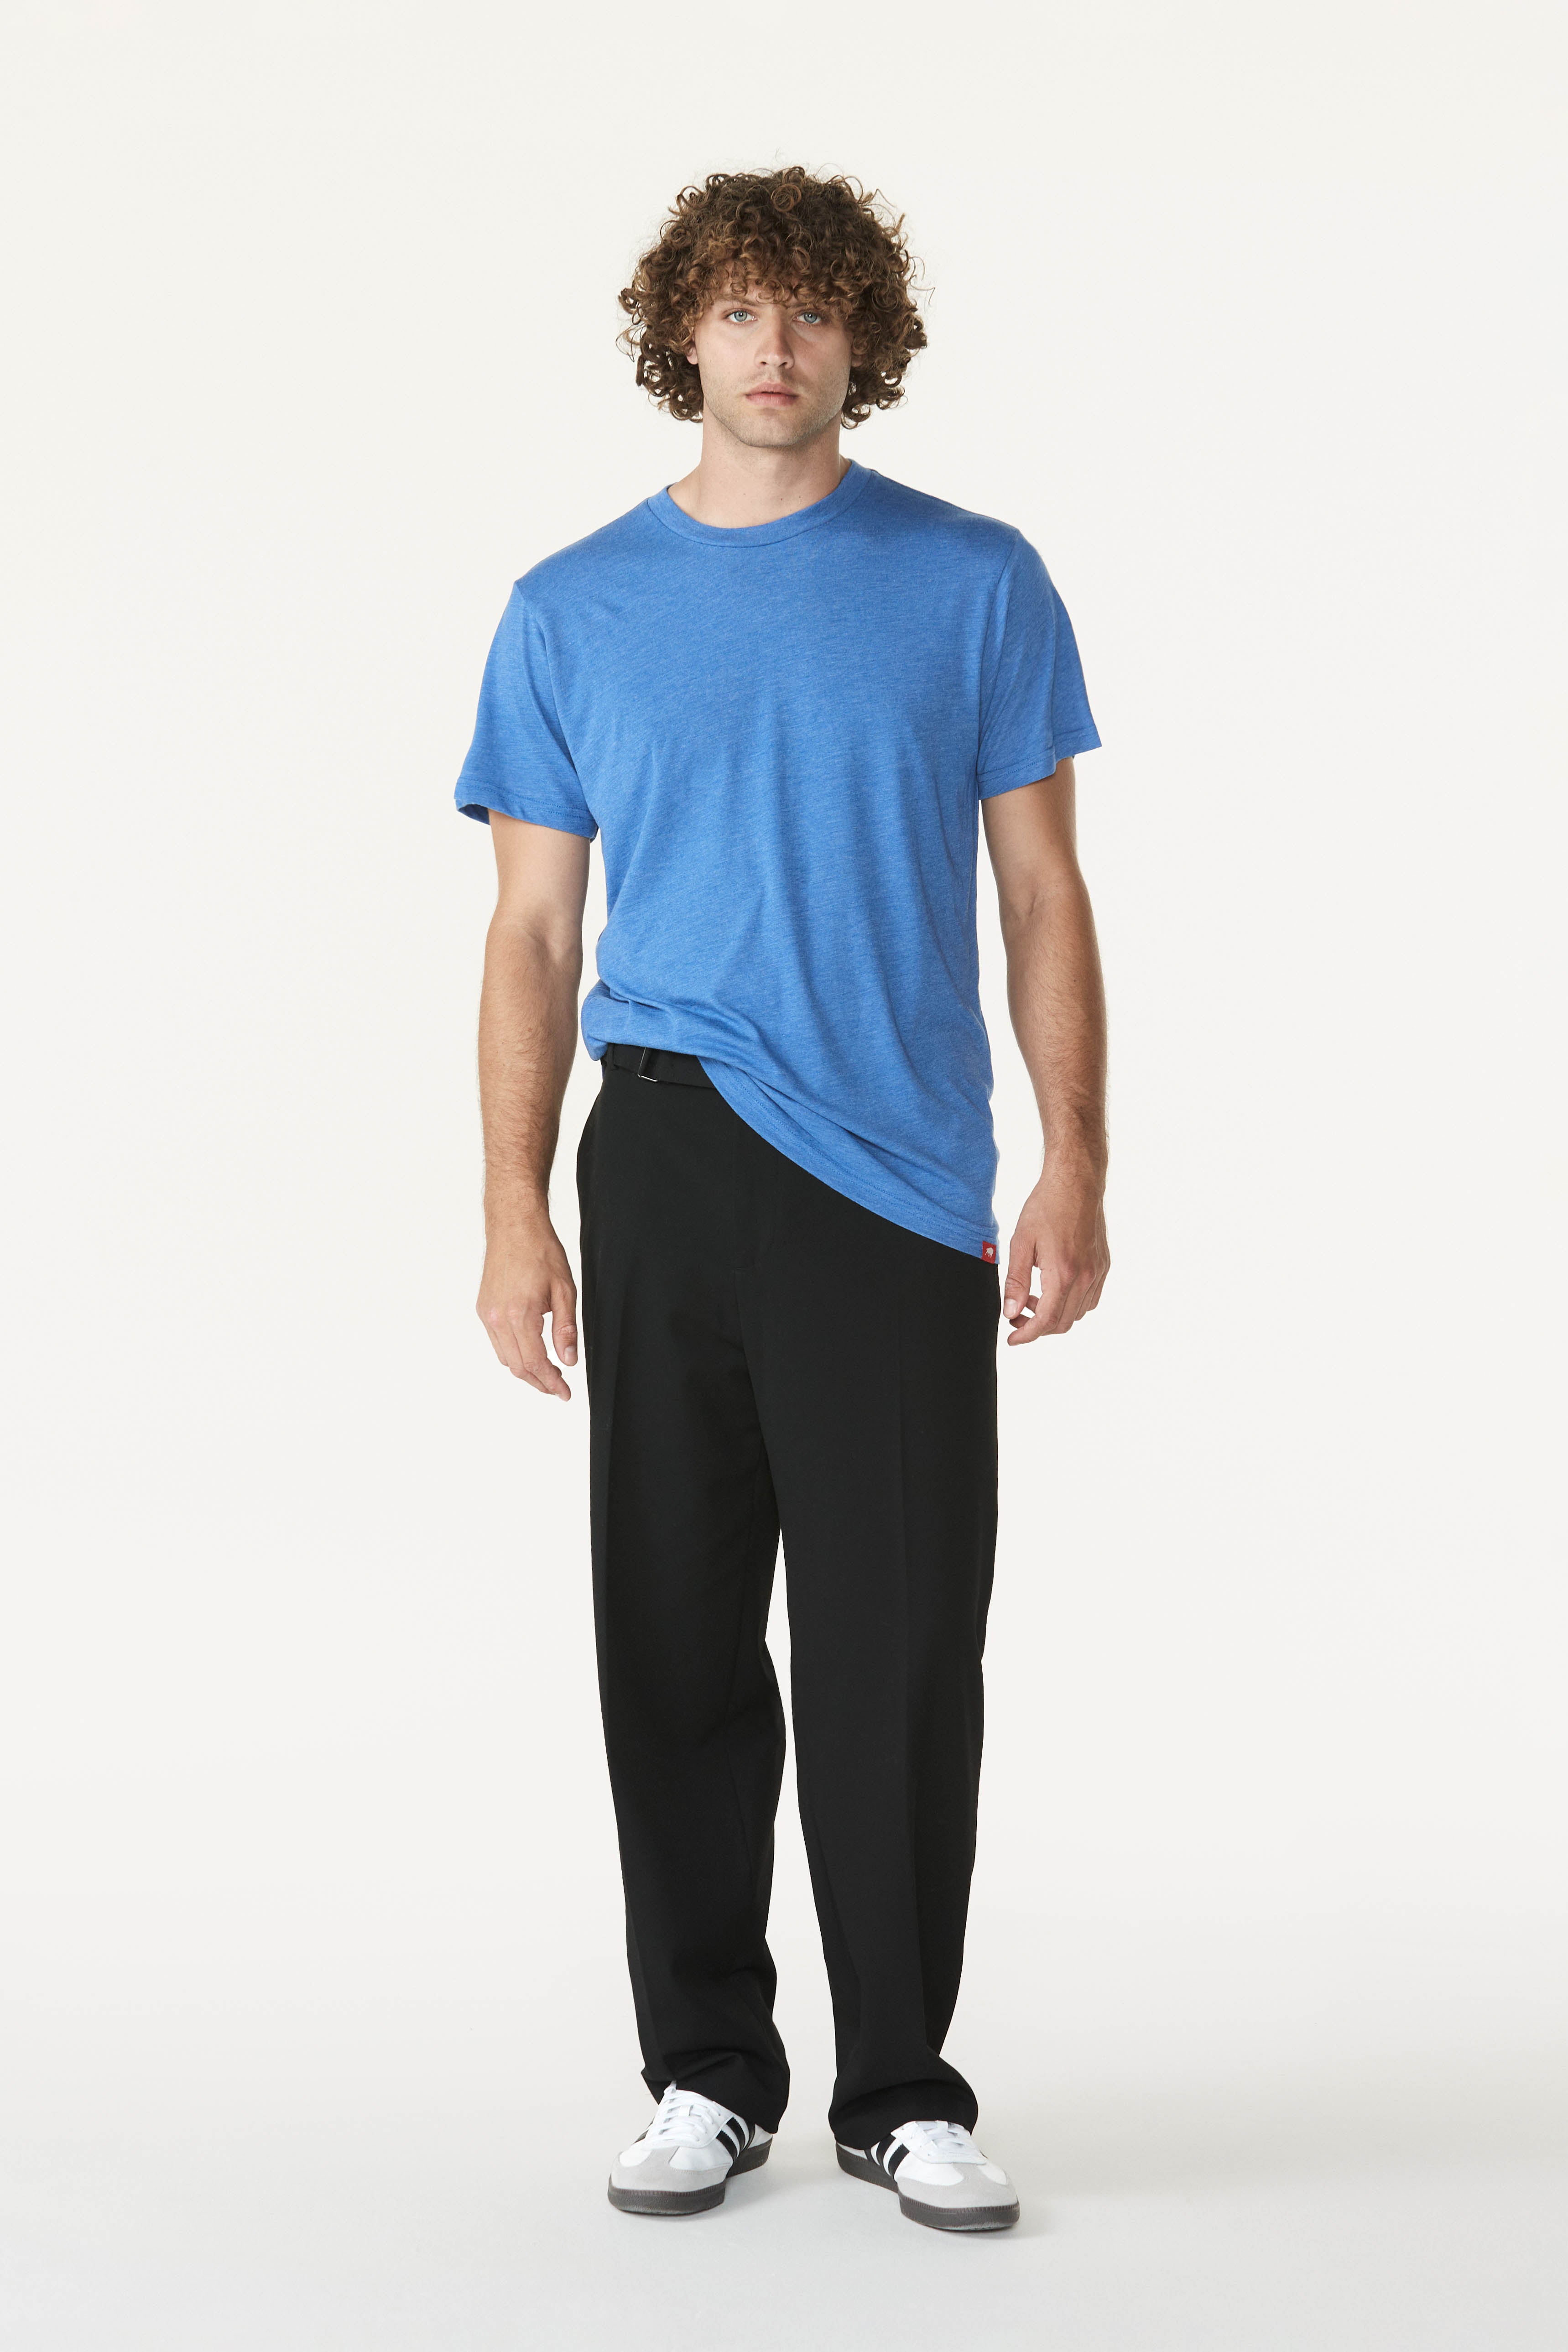 New York Knicks Sportiqe 2020/21 City Edition Comfy Long Sleeve T-Shirt -  Blue